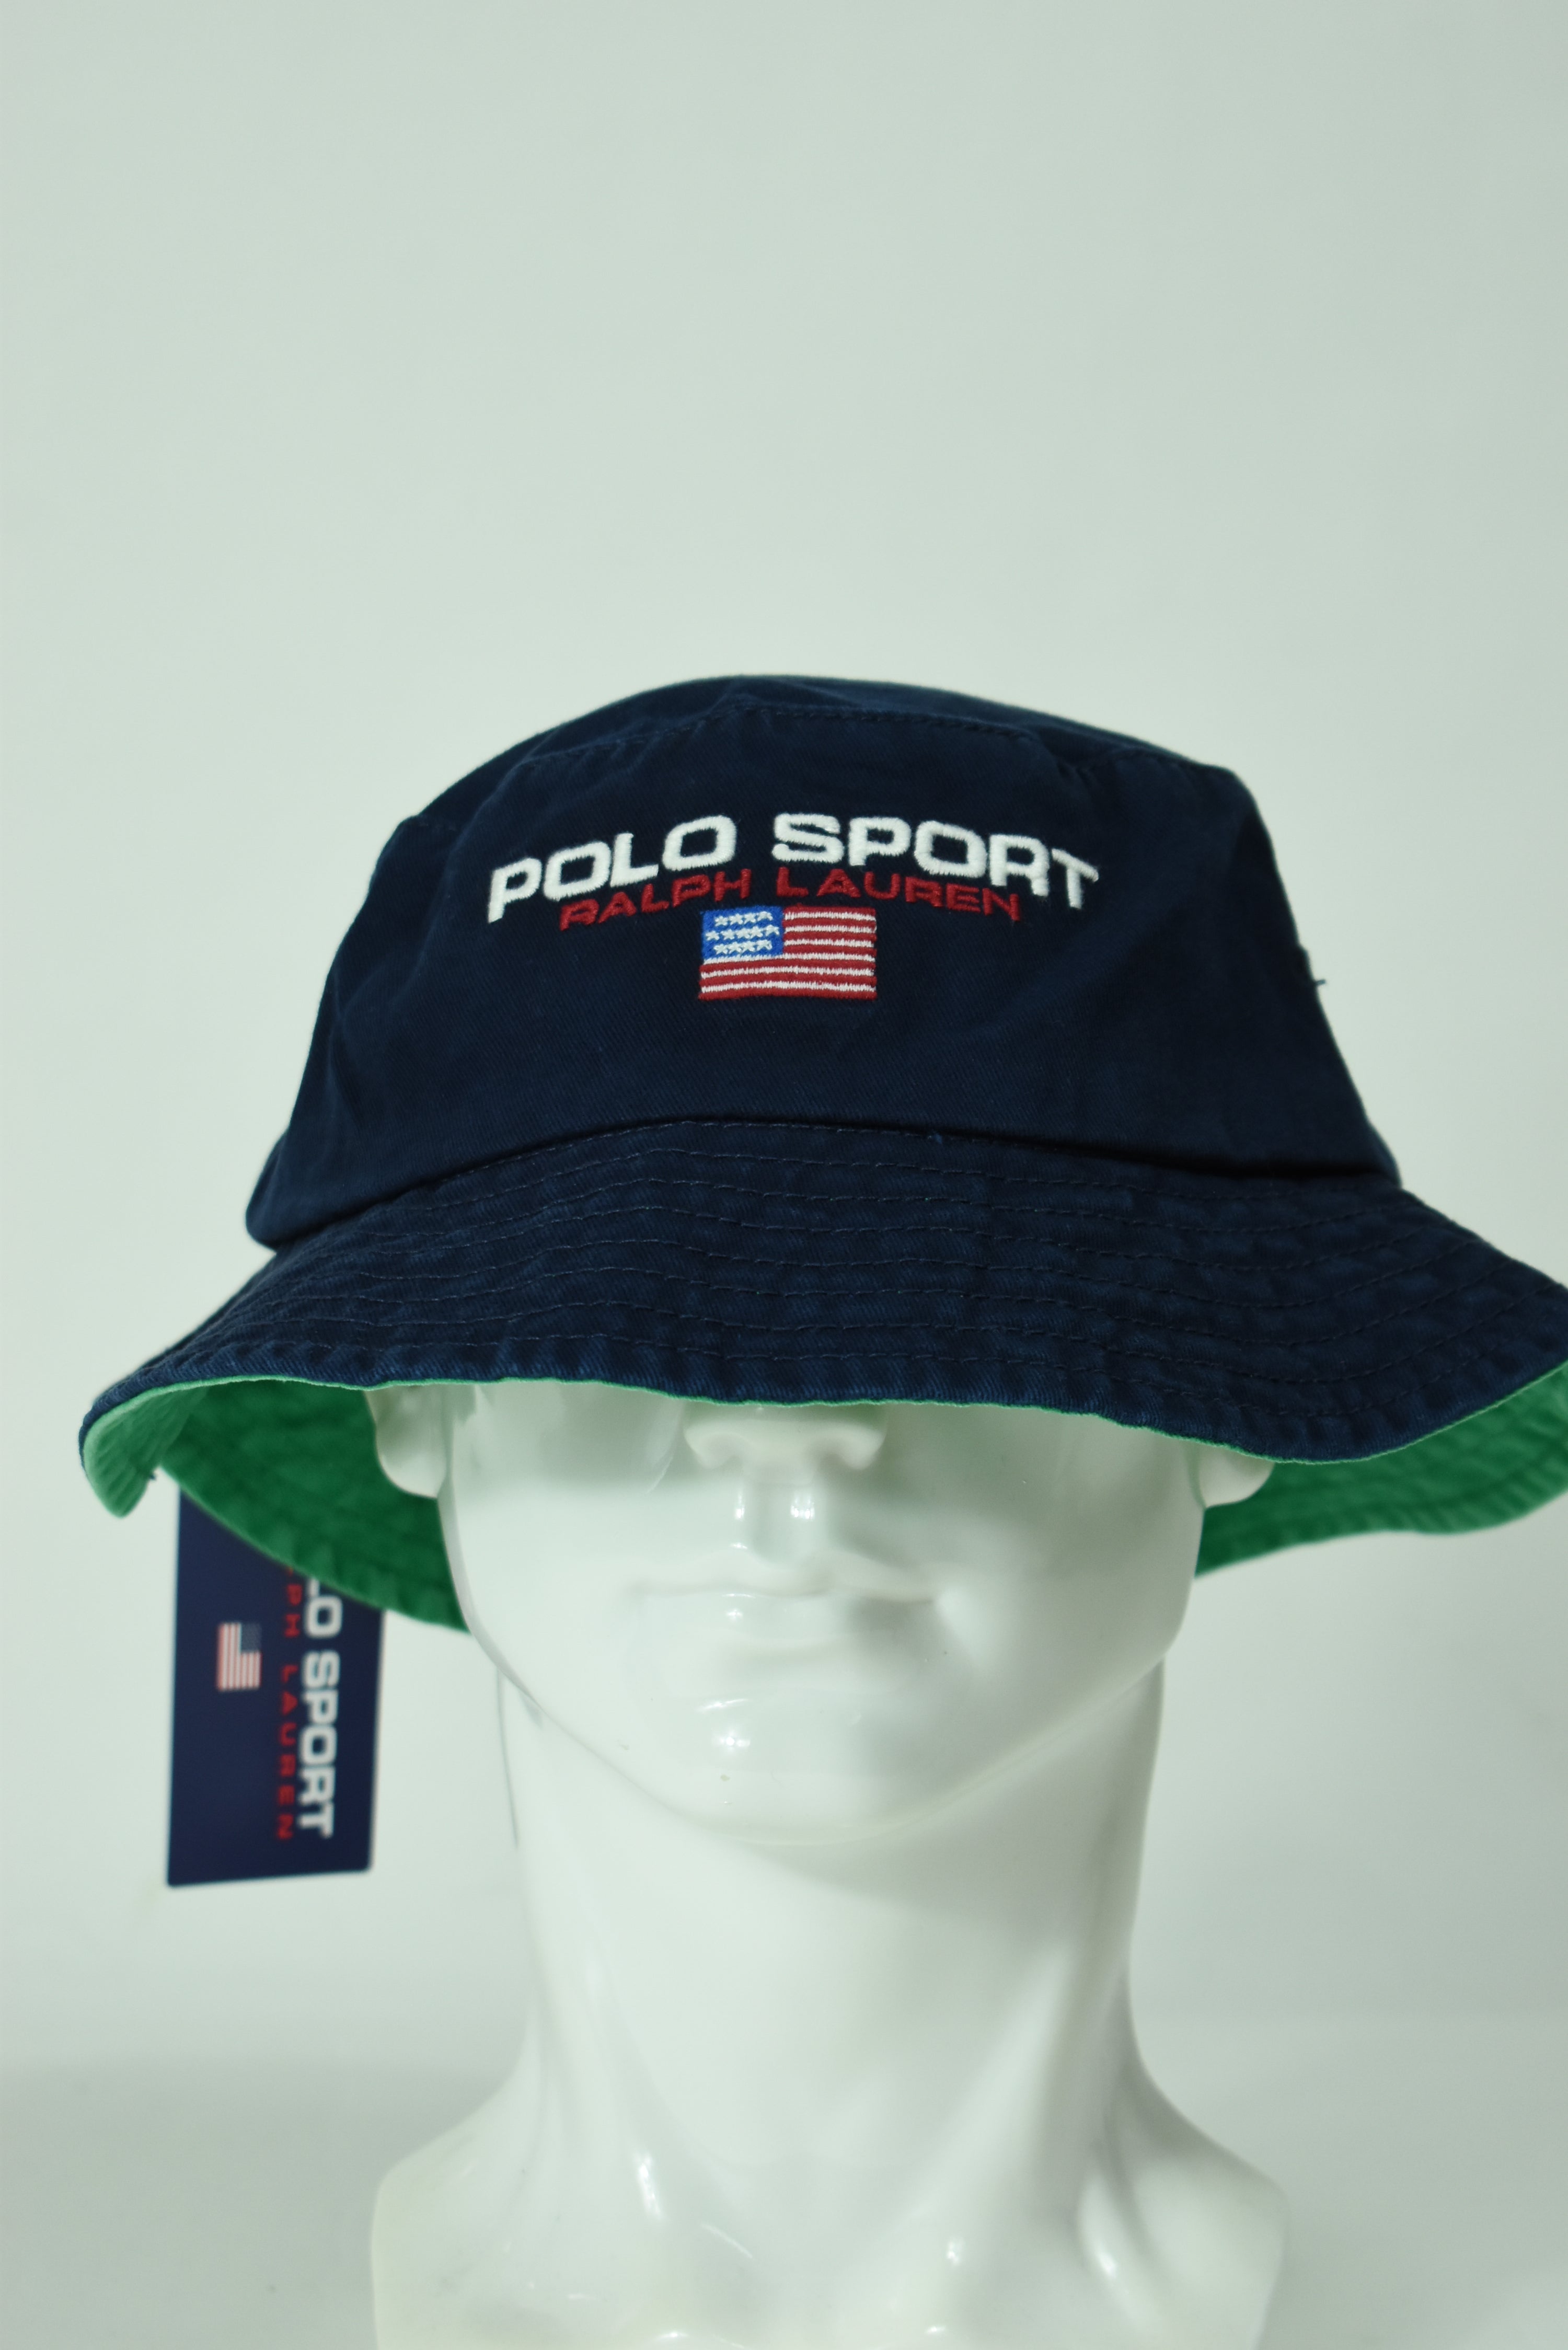 New Ralph Lauren Polo Sport Bucket Hat Navy OS